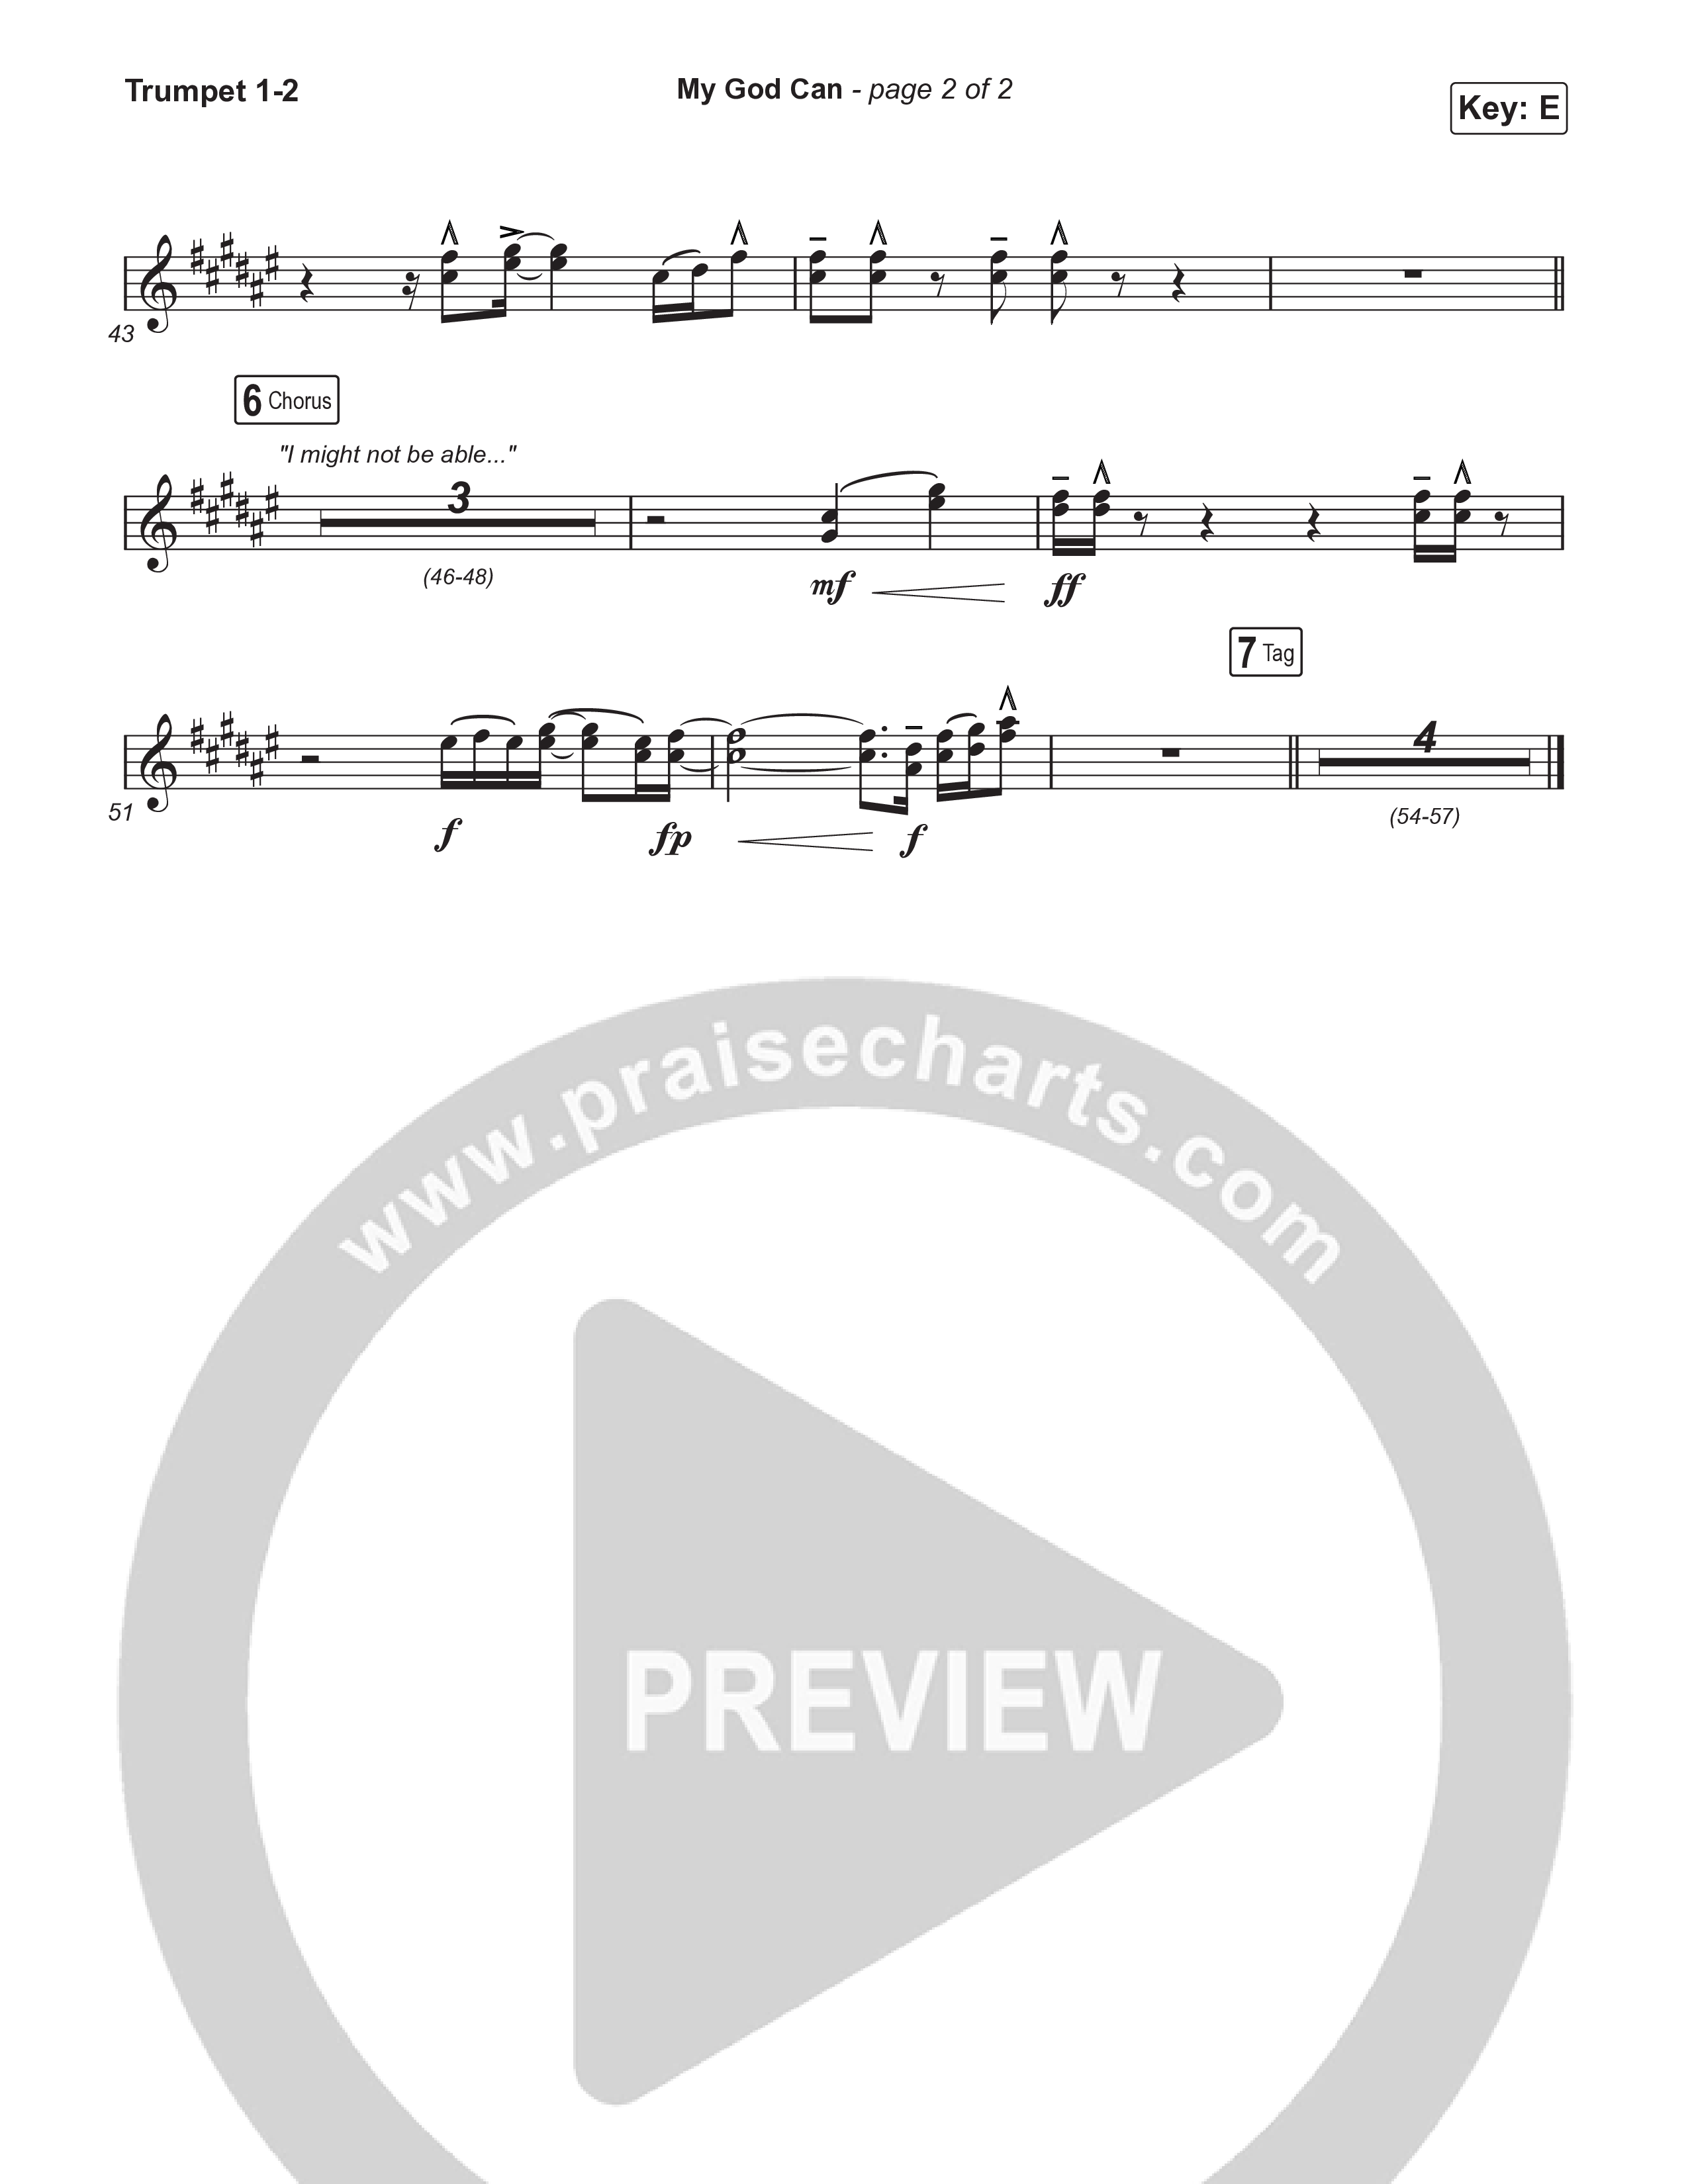 My God Can (Choral Anthem SATB) Trumpet 1,2 (Katy Nichole / Naomi Raine / Arr. Luke Gambill)